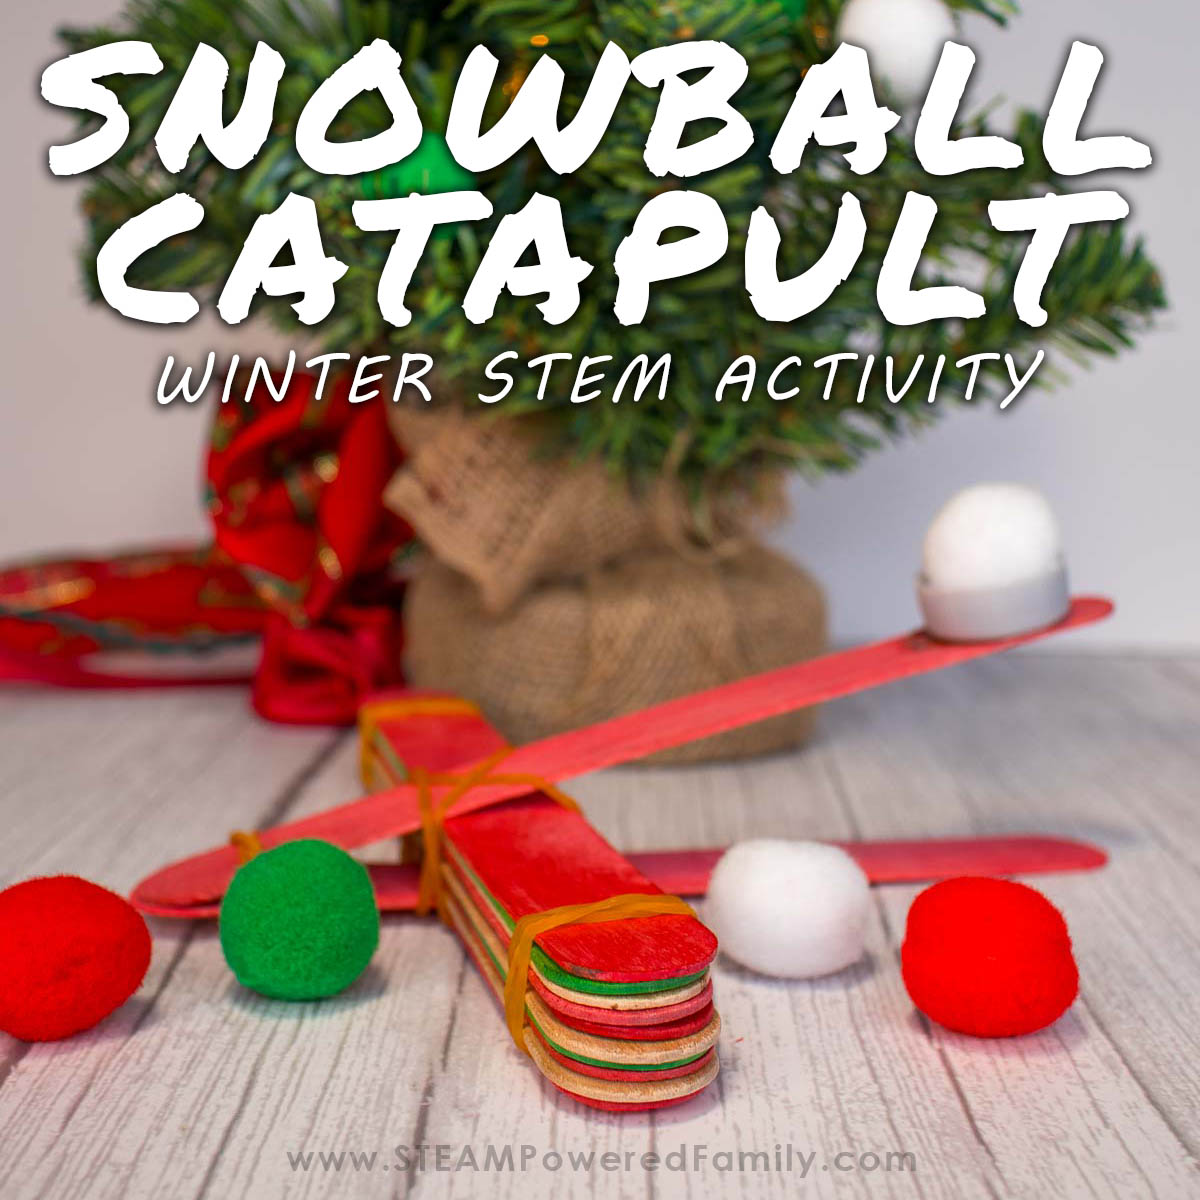 Snowball Catapult